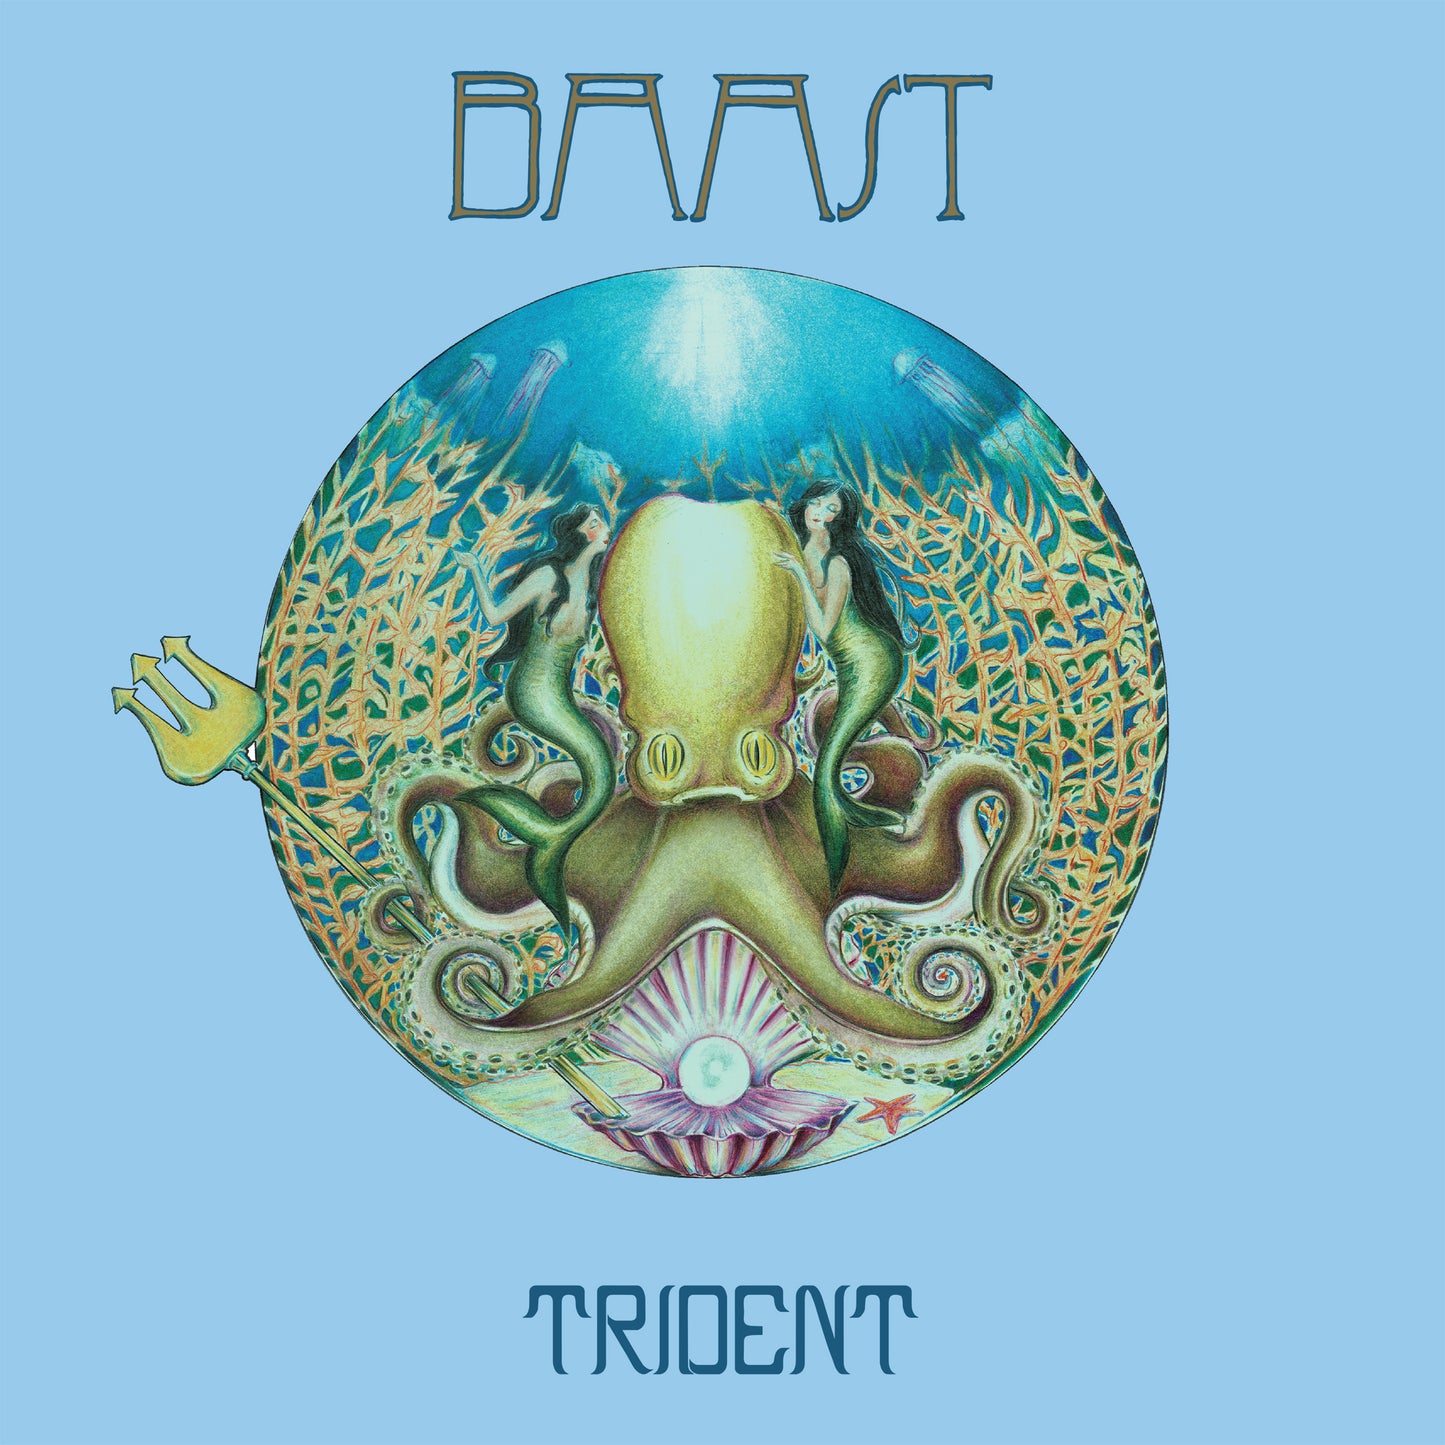 BAAST "Trident" LP